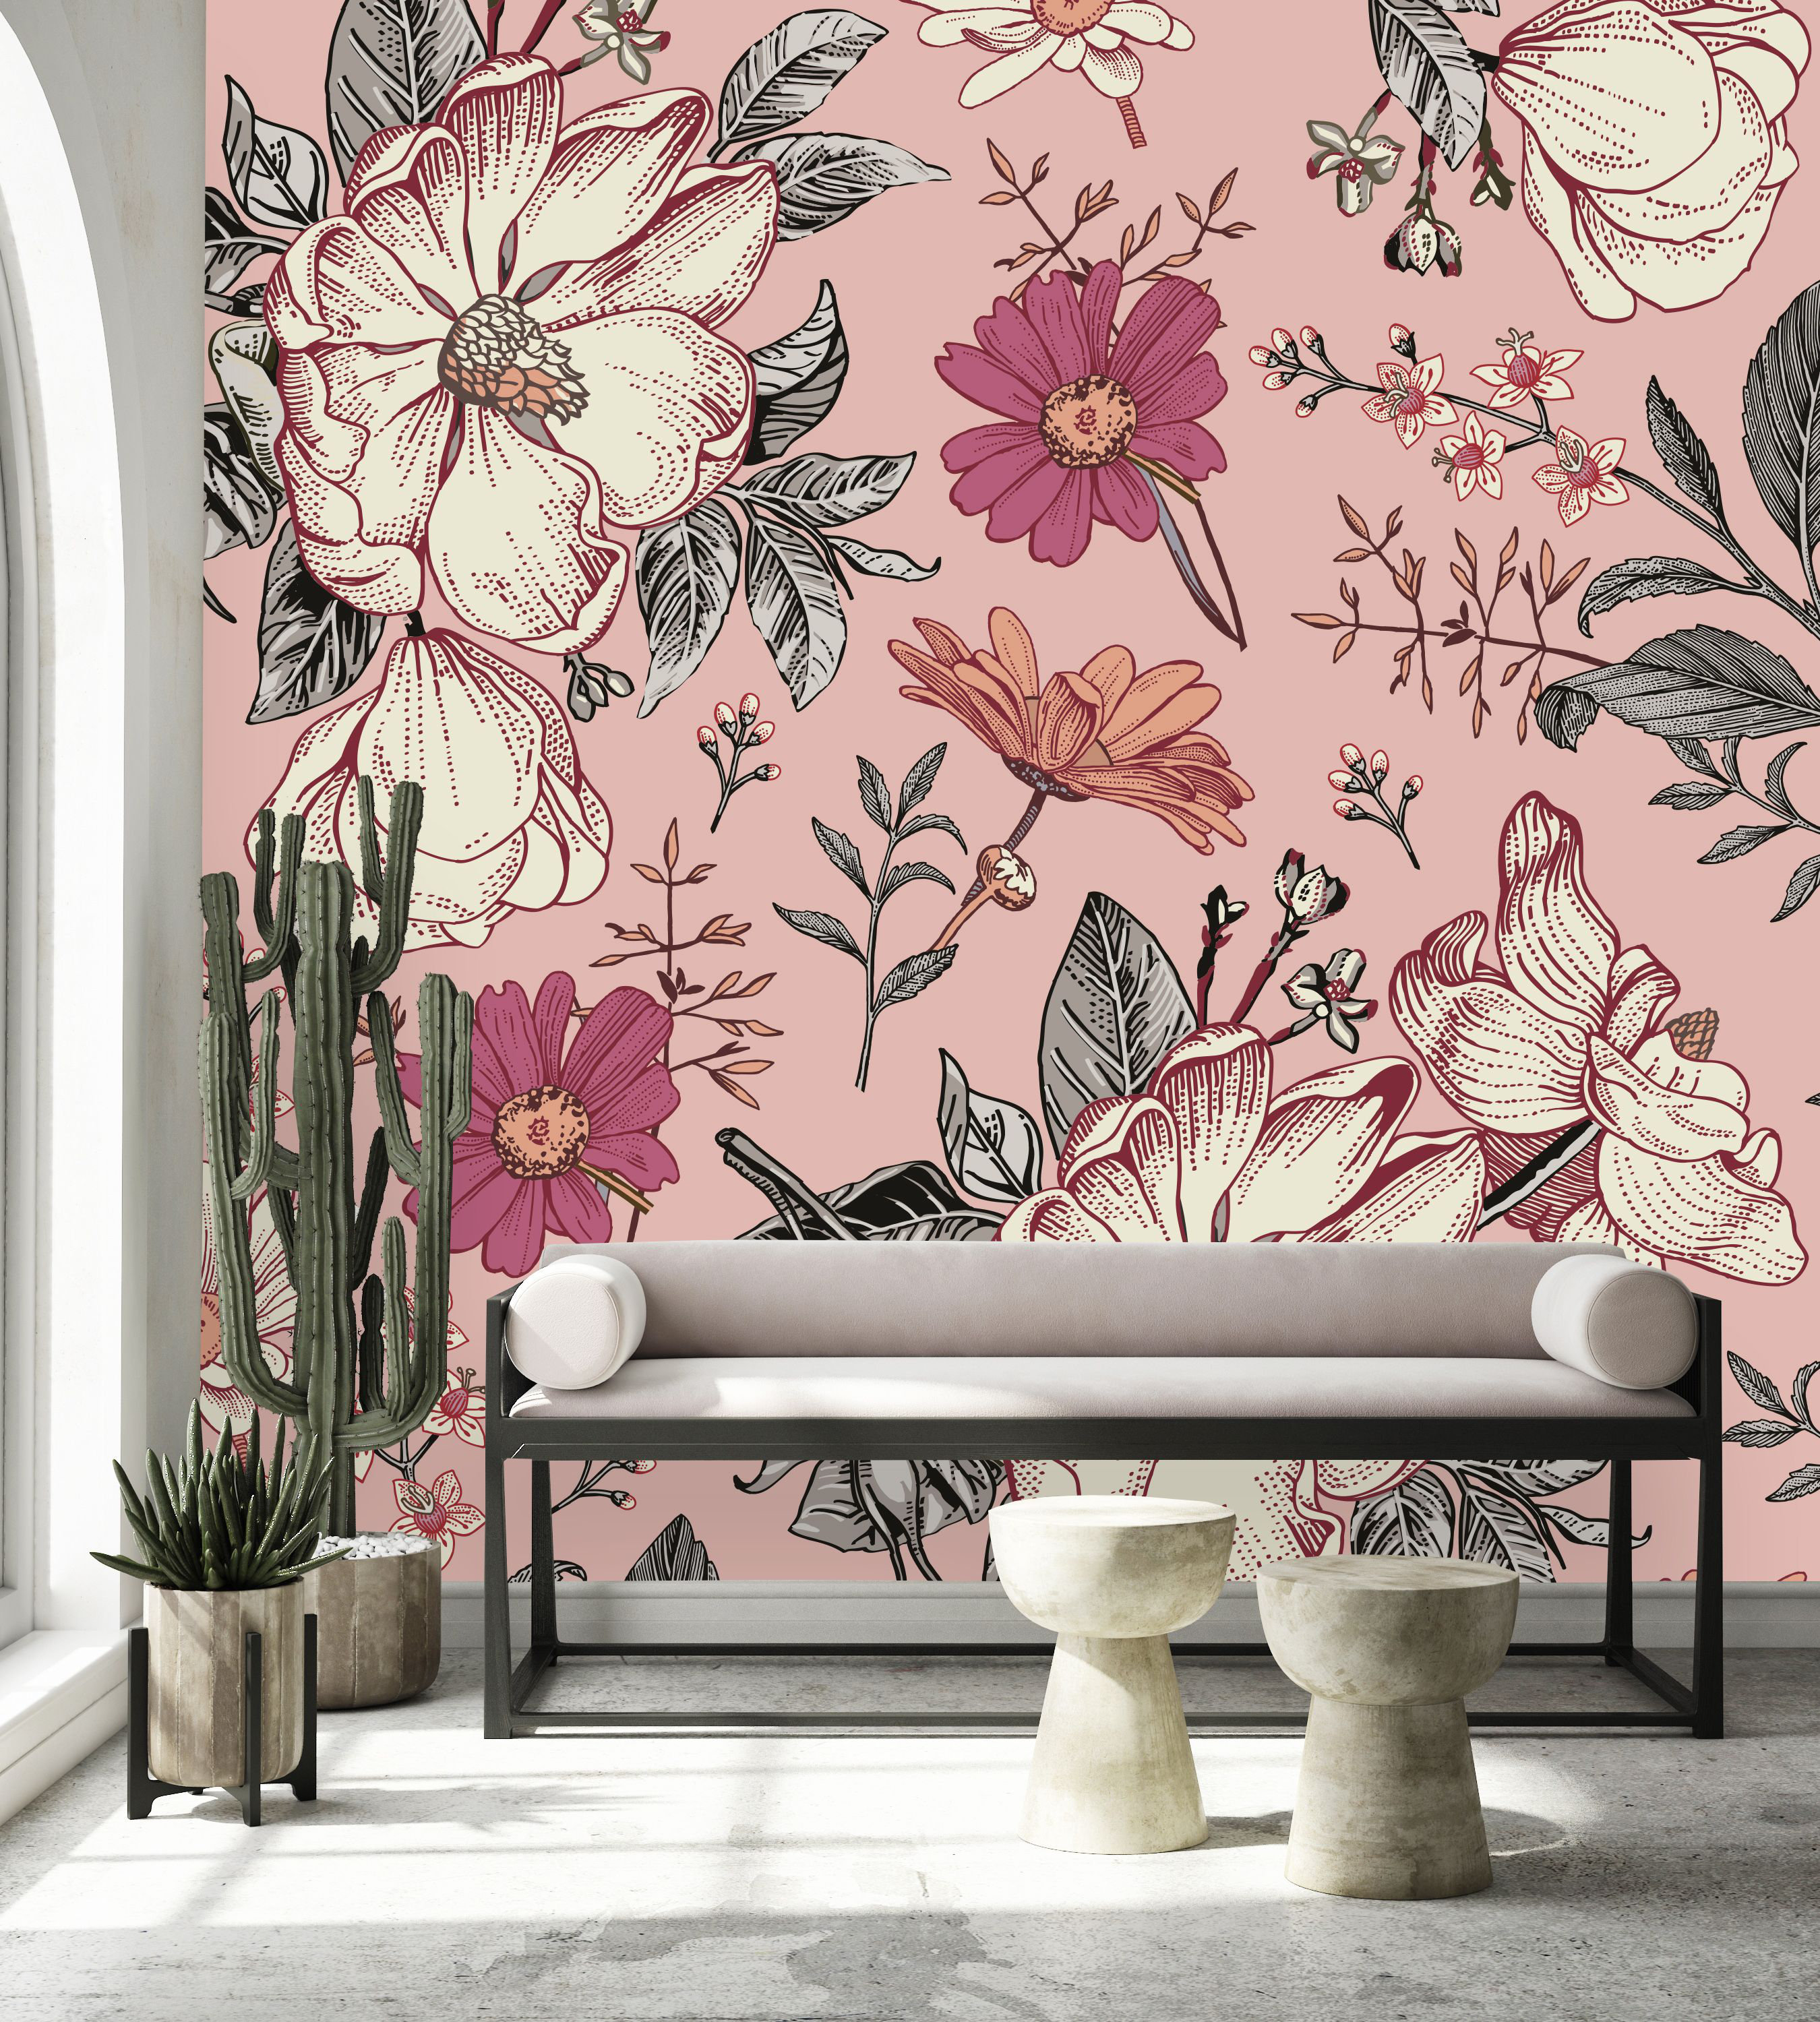 Red Barrel Studio® Floral Wall Mural | Wayfair